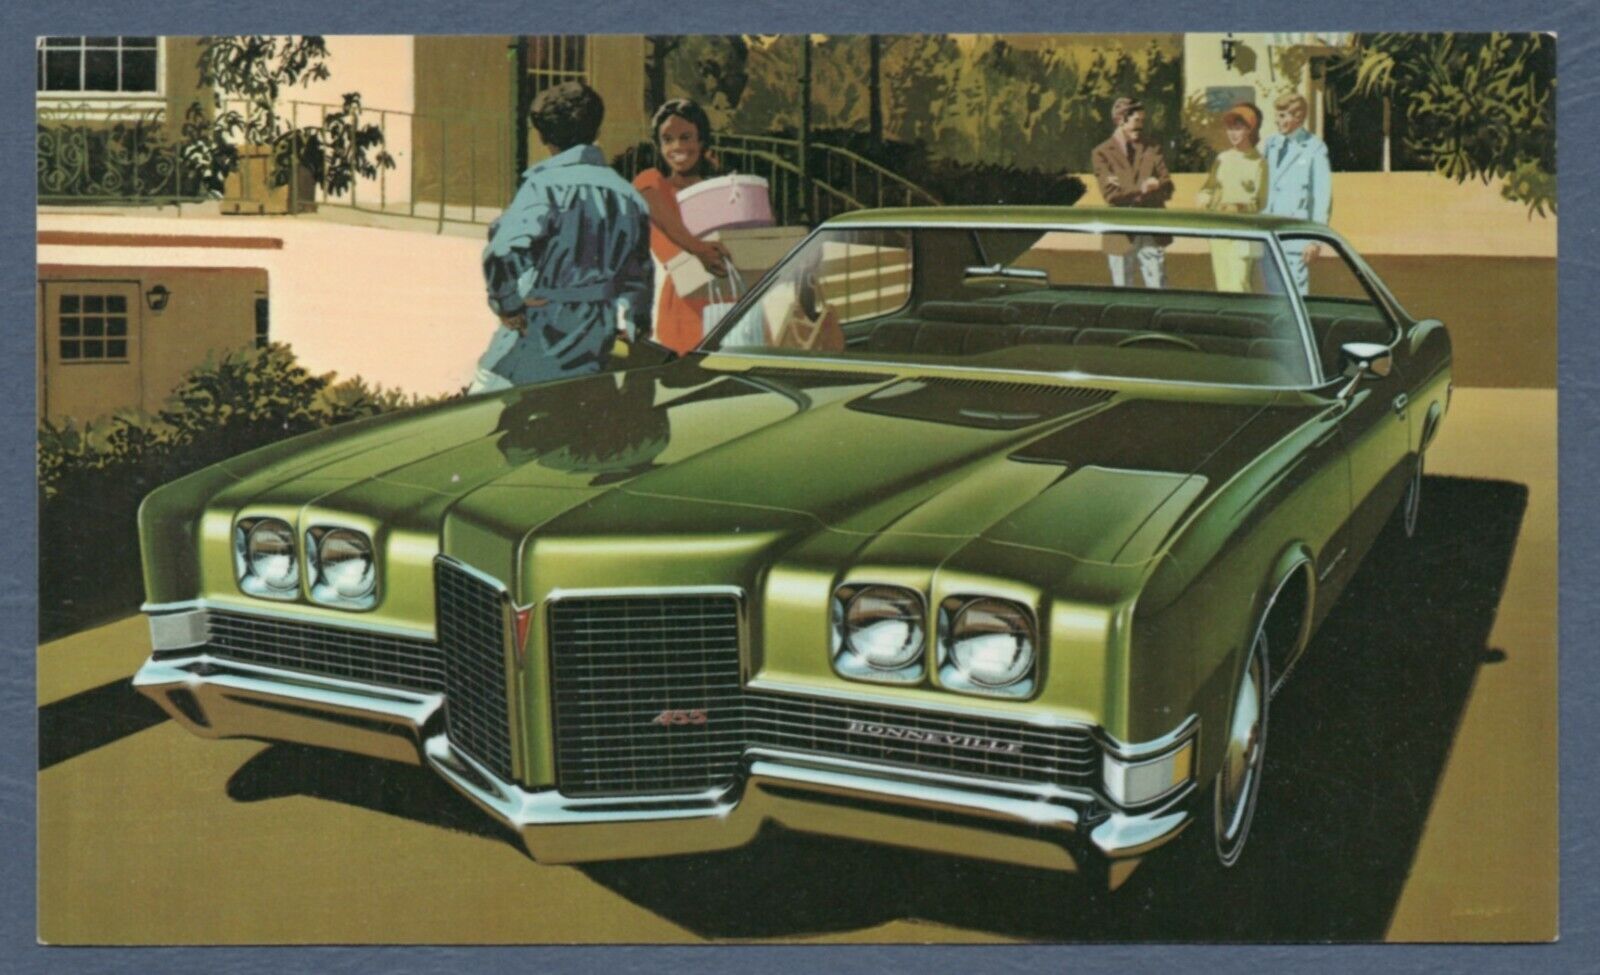 1971 Pontiac Bonneville Hardtop Coupe: Original NOS Dealer Promo Postcard UNUSED